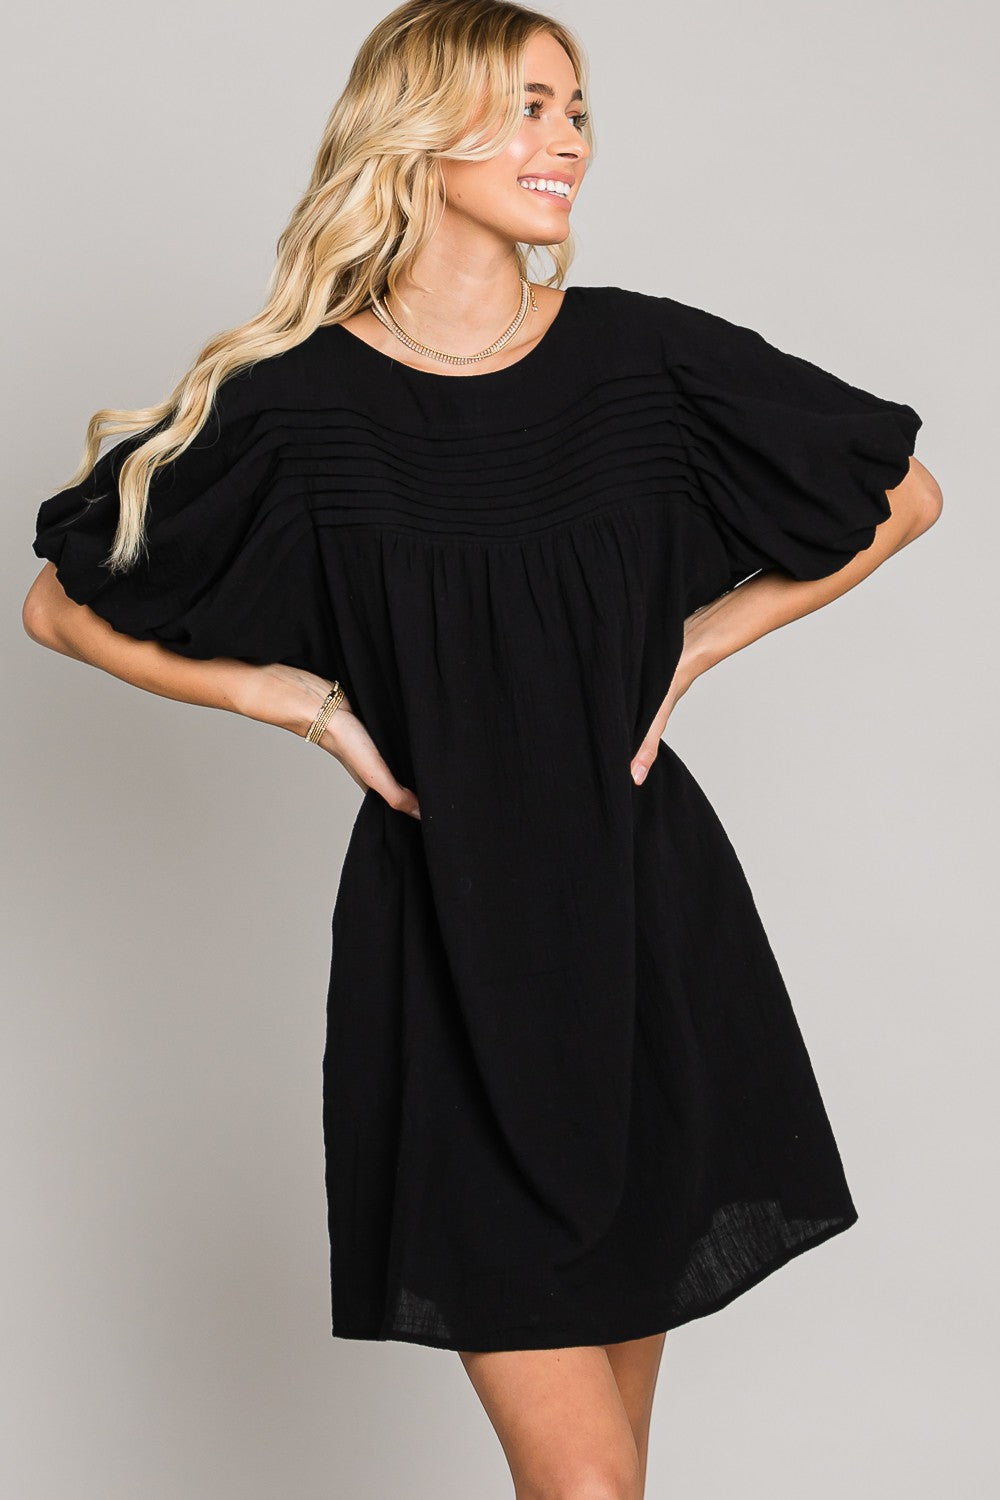 Mandy Black Shift Dress - KC Outfitter